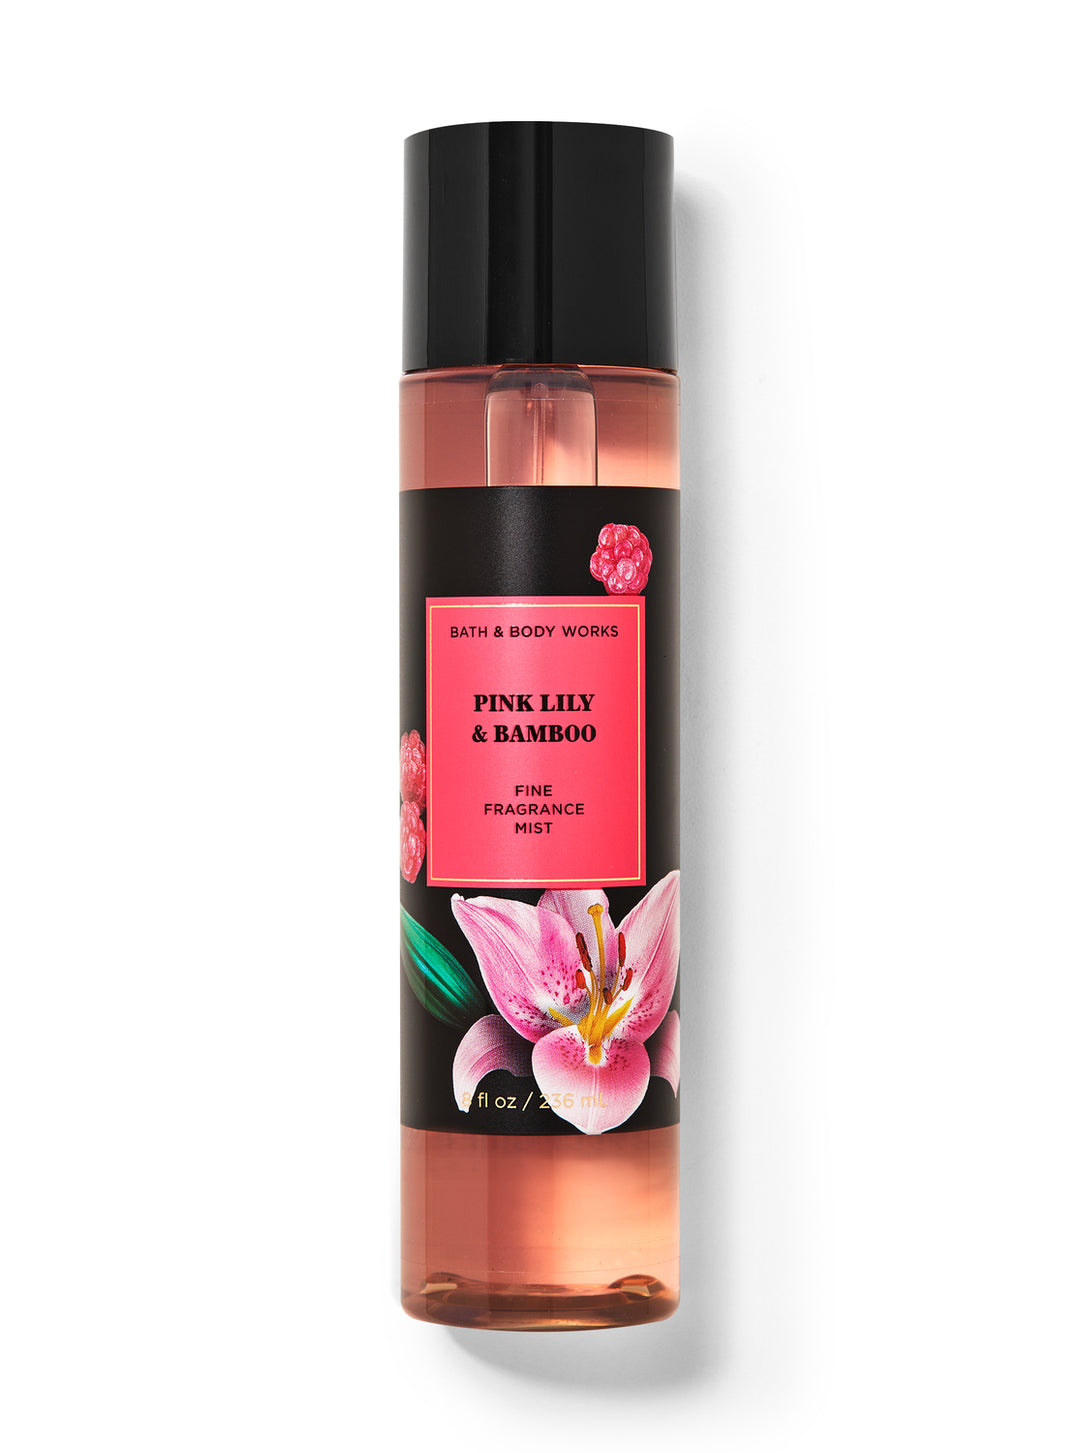 Bath & Body Works Pink Lily & Bamboo Fine Fragrance Mist